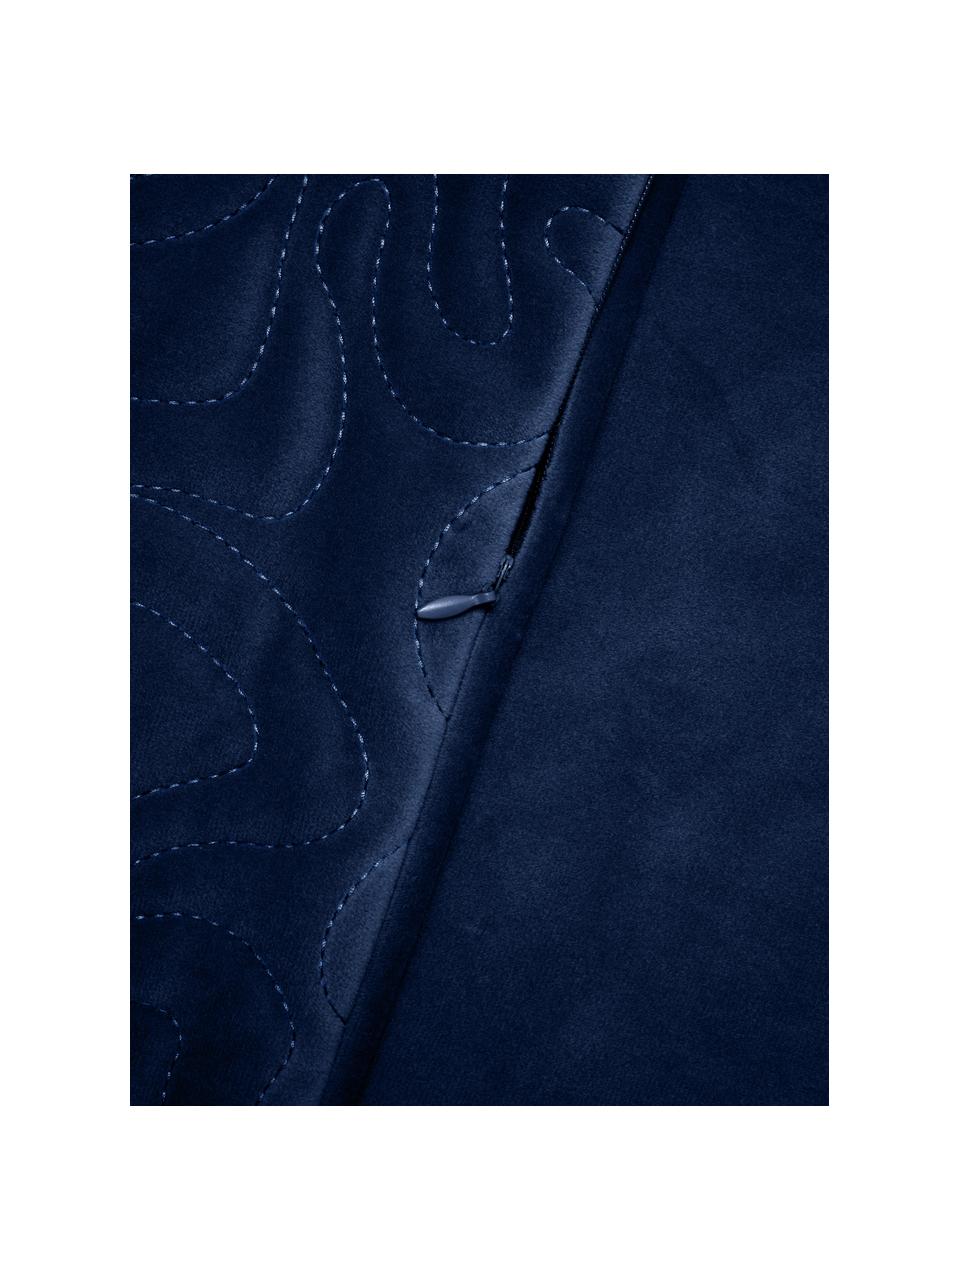 Samt-Kissenhülle Hera mit dekorativer Verzierung, 100 % recyceltes Polyester, Dunkelblau, B 45 x L 45 cm